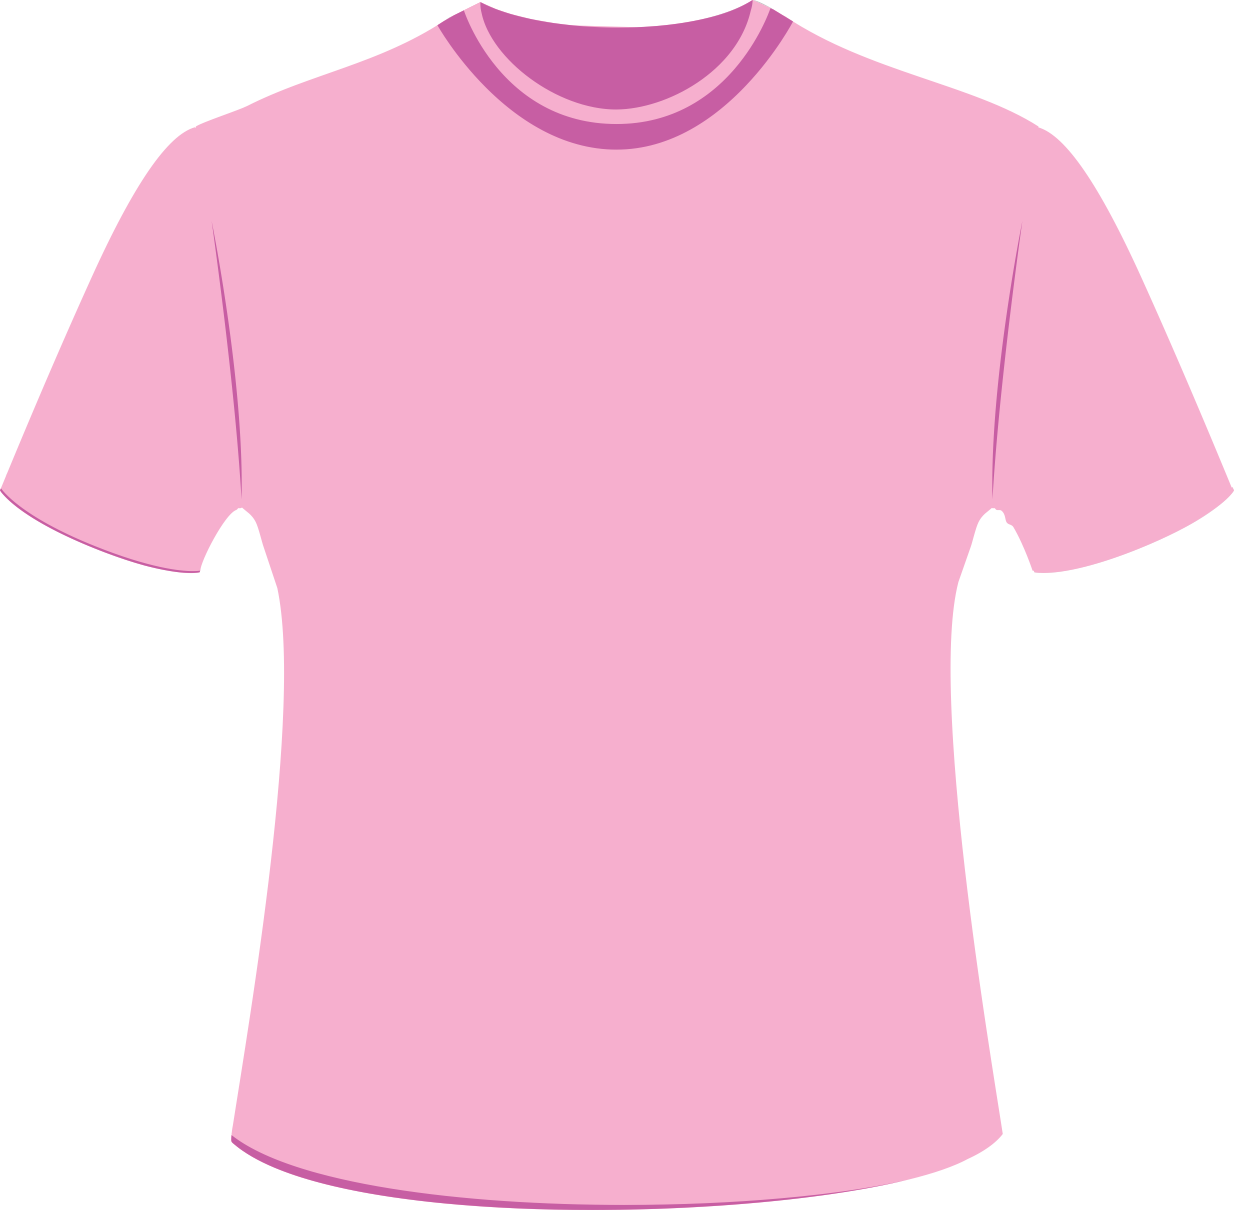 Mockup Camiseta Rosa Editável